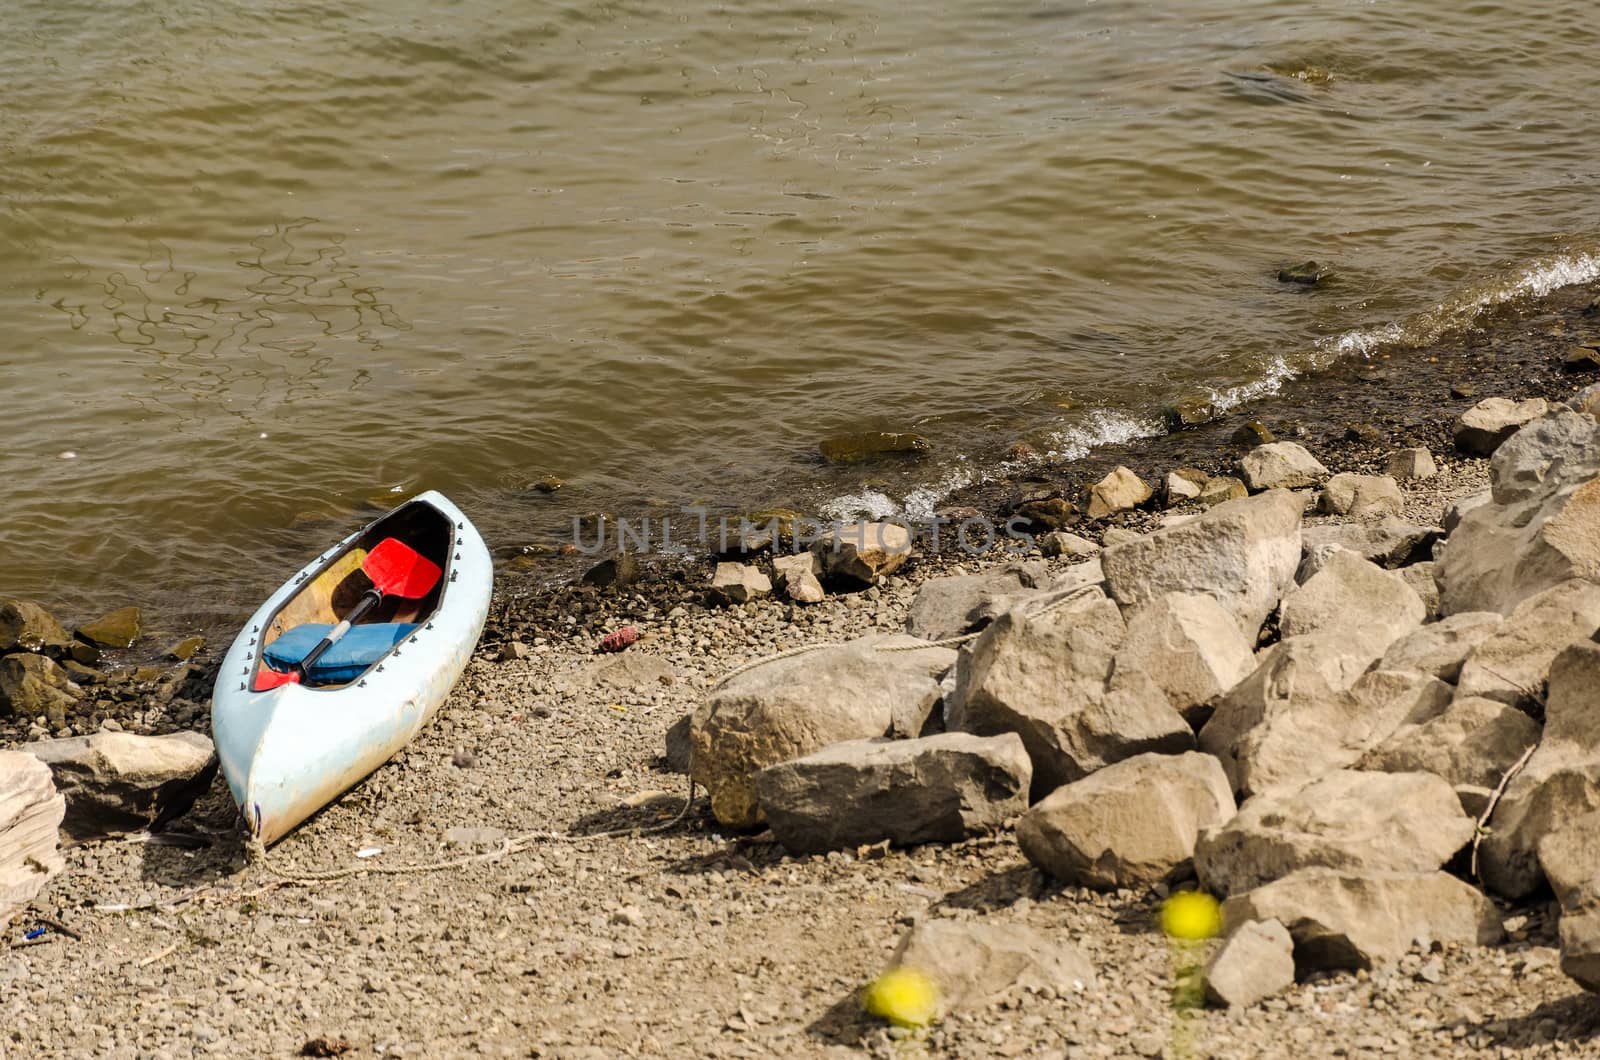 Canoe on River Bank by jkraft5